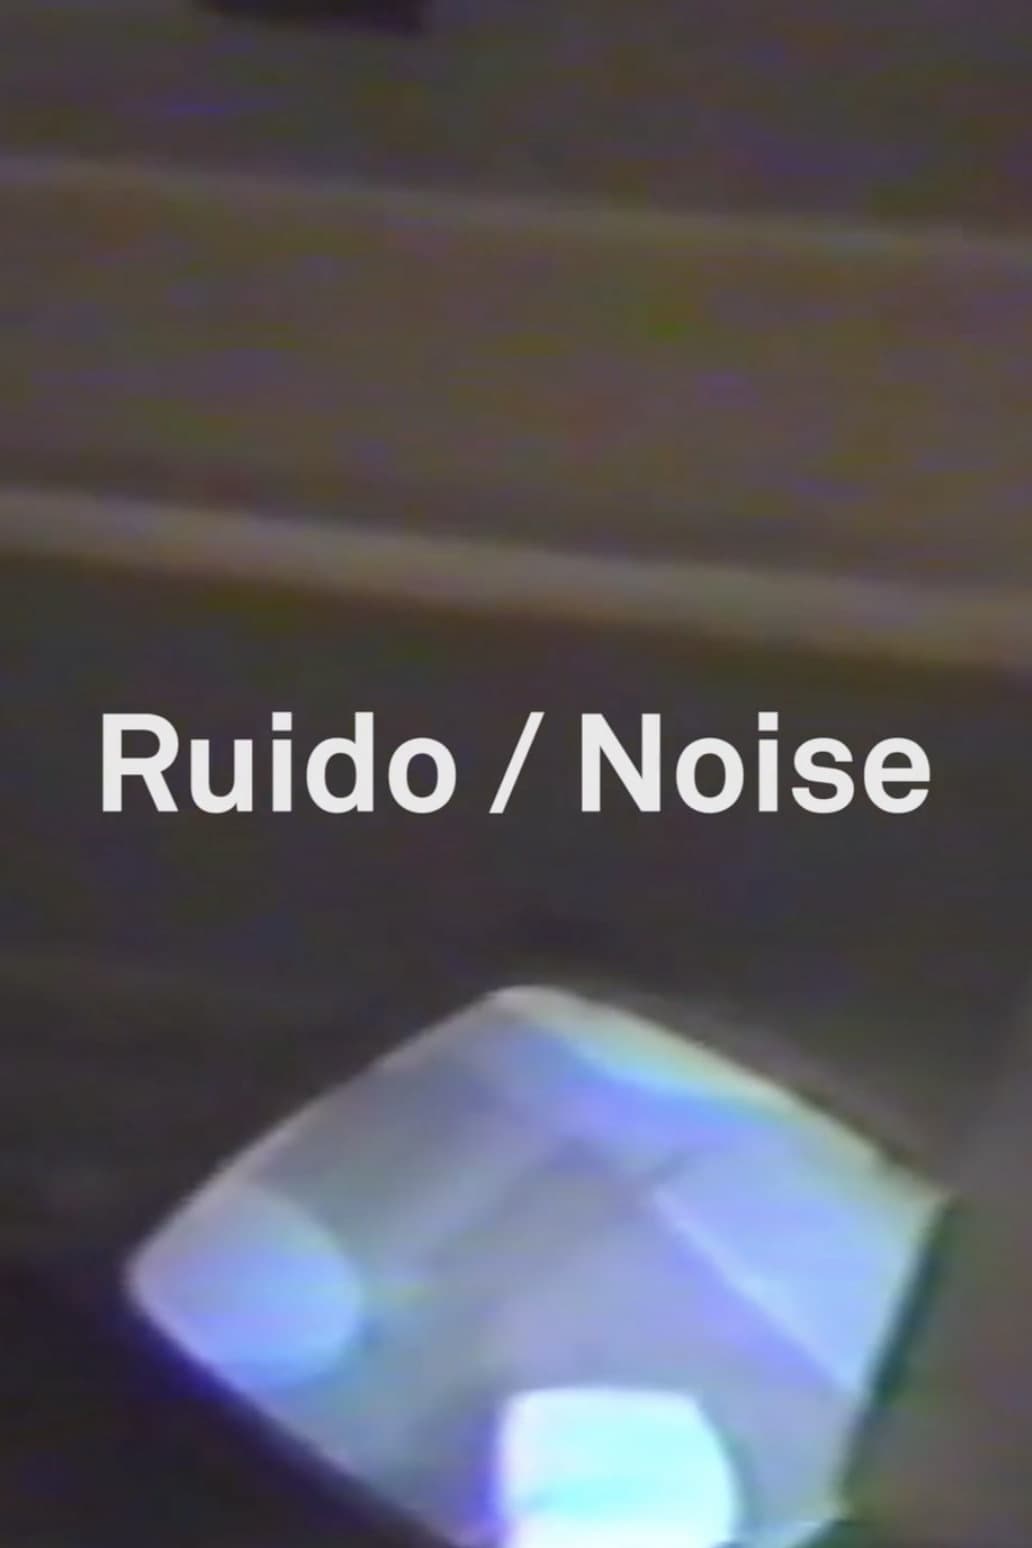 Ruido (Noise)